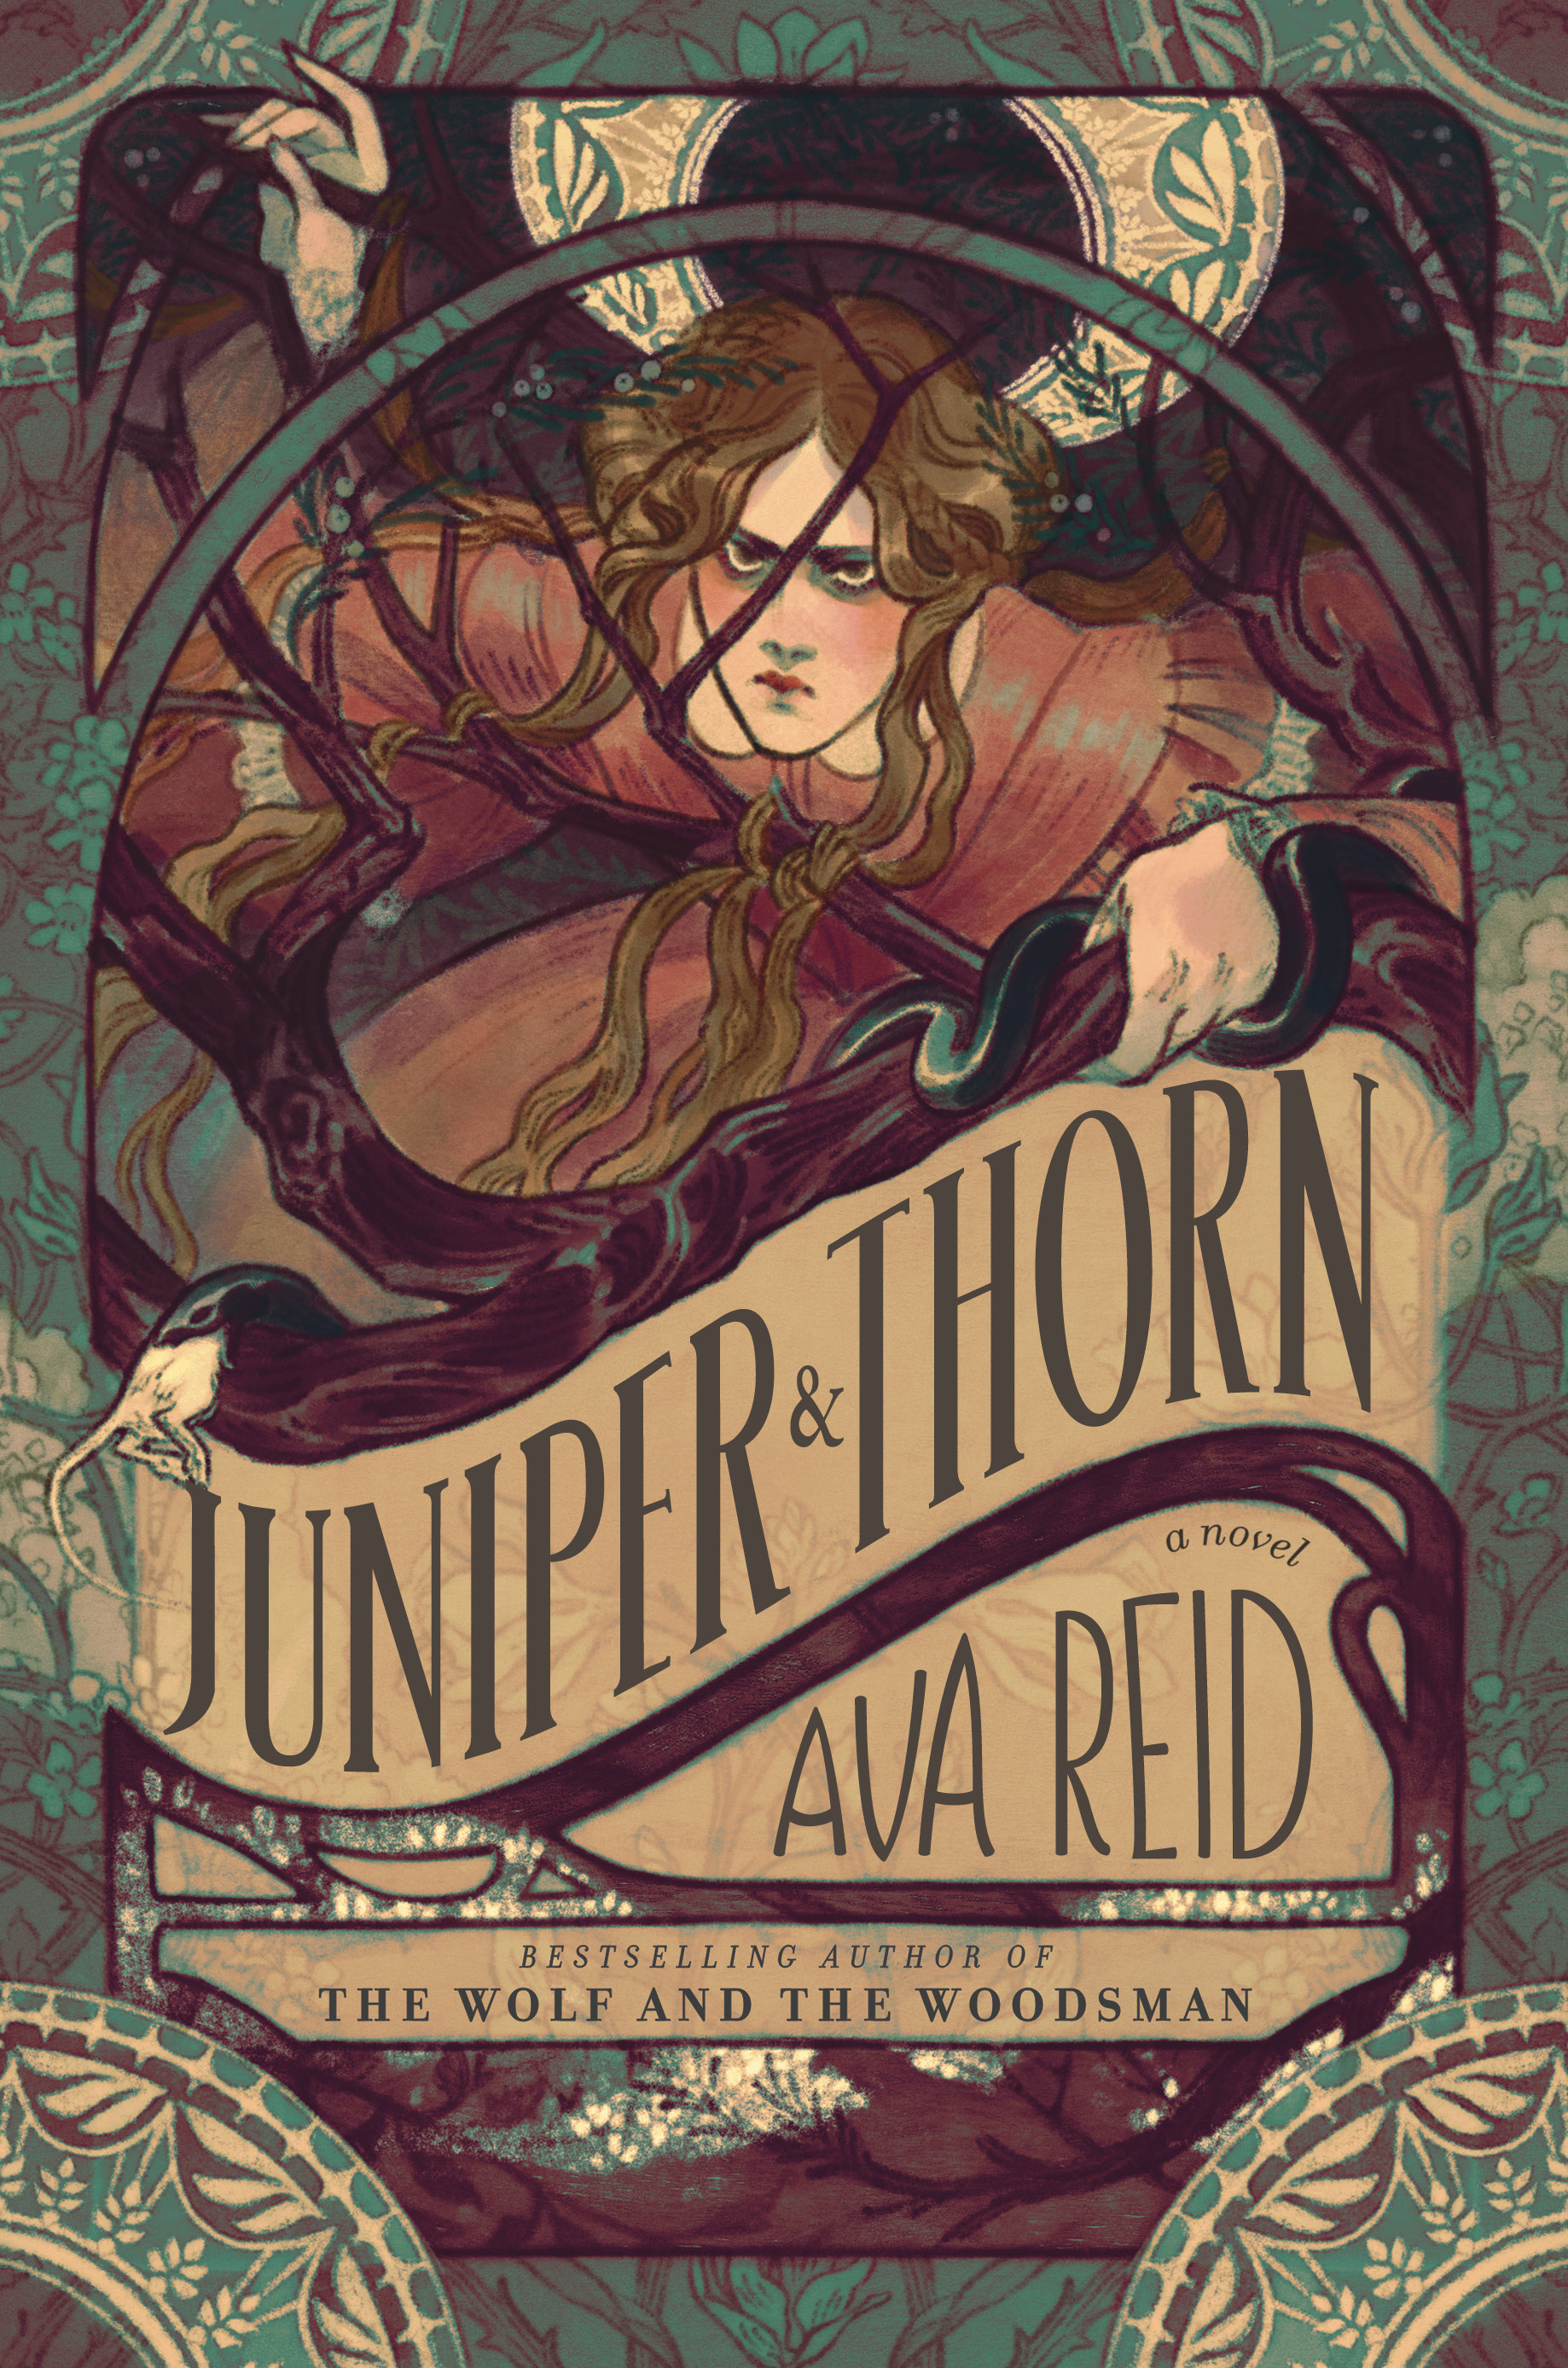 [EPUB] Juniper & Thorn by Ava Reid